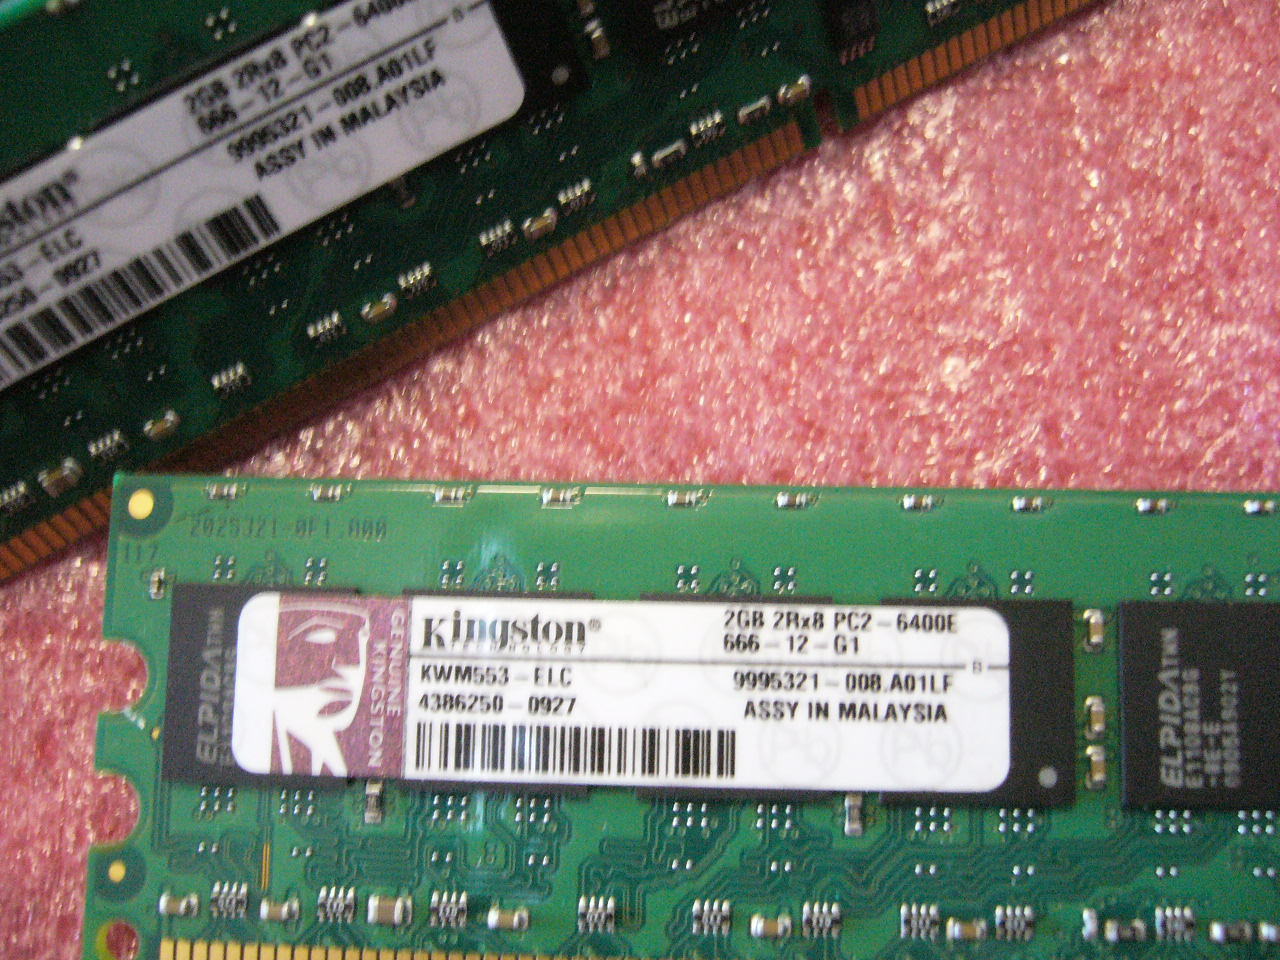 QTY 1x 2GB DDR2 PC2-6400E 2Rx8 800Mhz ECC workstation memory Kingston KWM553-ELC - Click Image to Close